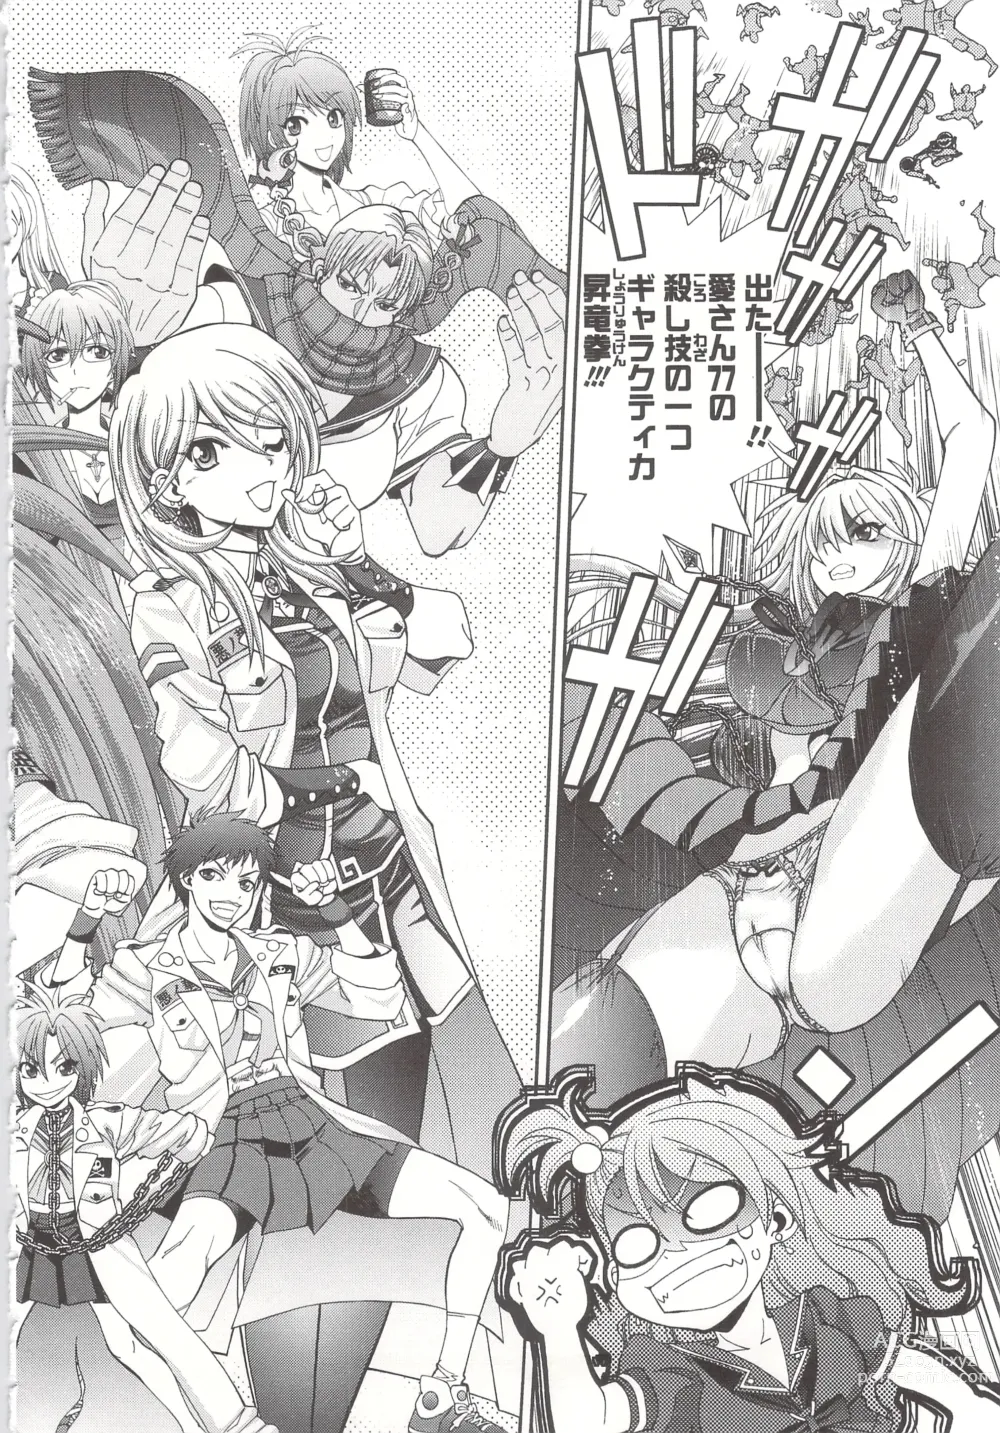 Page 10 of manga Tsujidou-san no Virgin Road Adult Edition